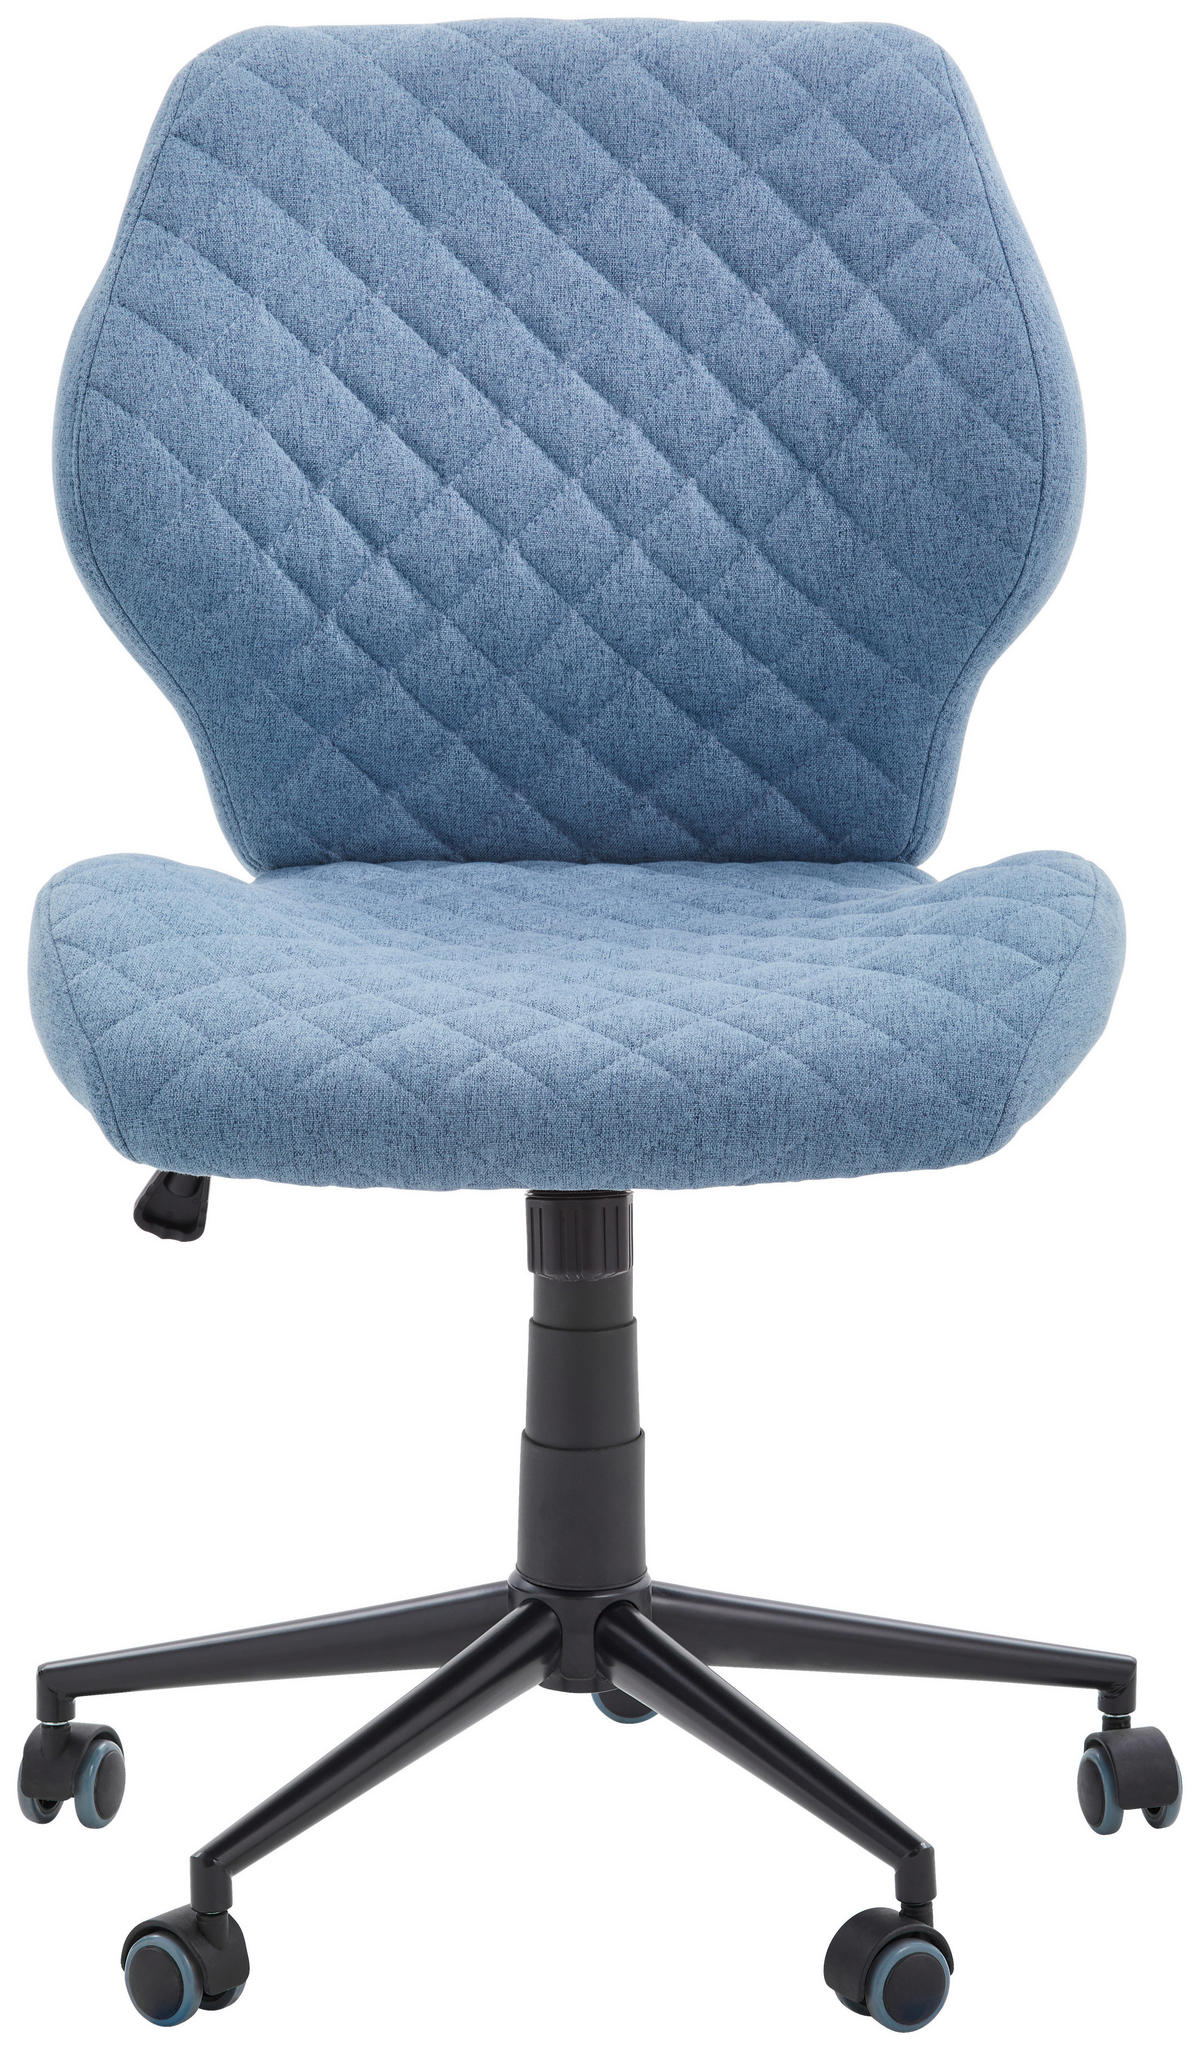 Stretch Bürostuhlbezug, Slipcover Protector Waschbar Abnehmbare Anti-Staub  Dreh Stuhl Sitzbezug für Computer Stuhl Sessel - Blau